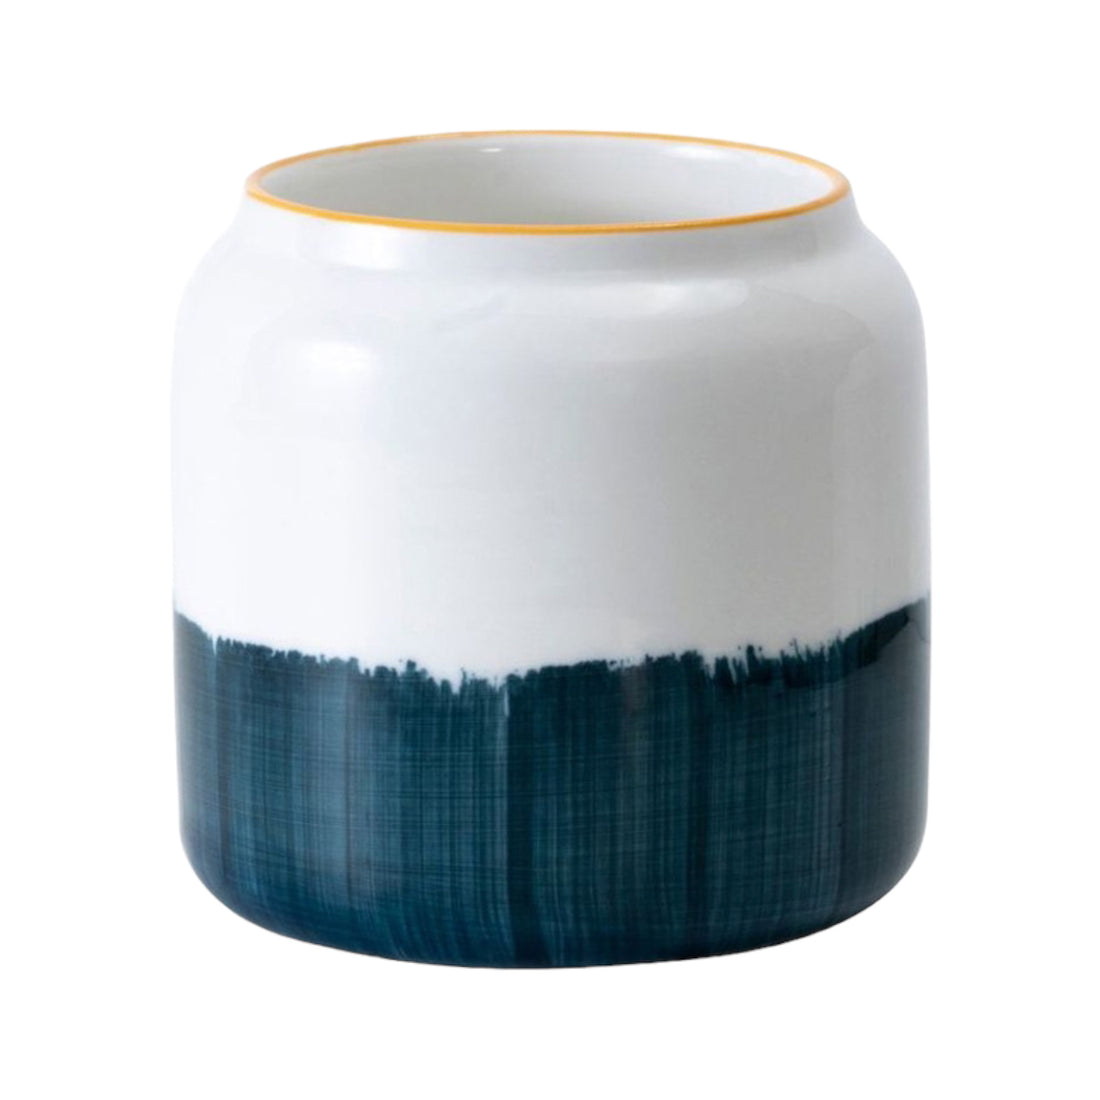 BROMMA Keramik-Blumentopf | Handbemalt mit blauen Akzenten | Ø 7cm